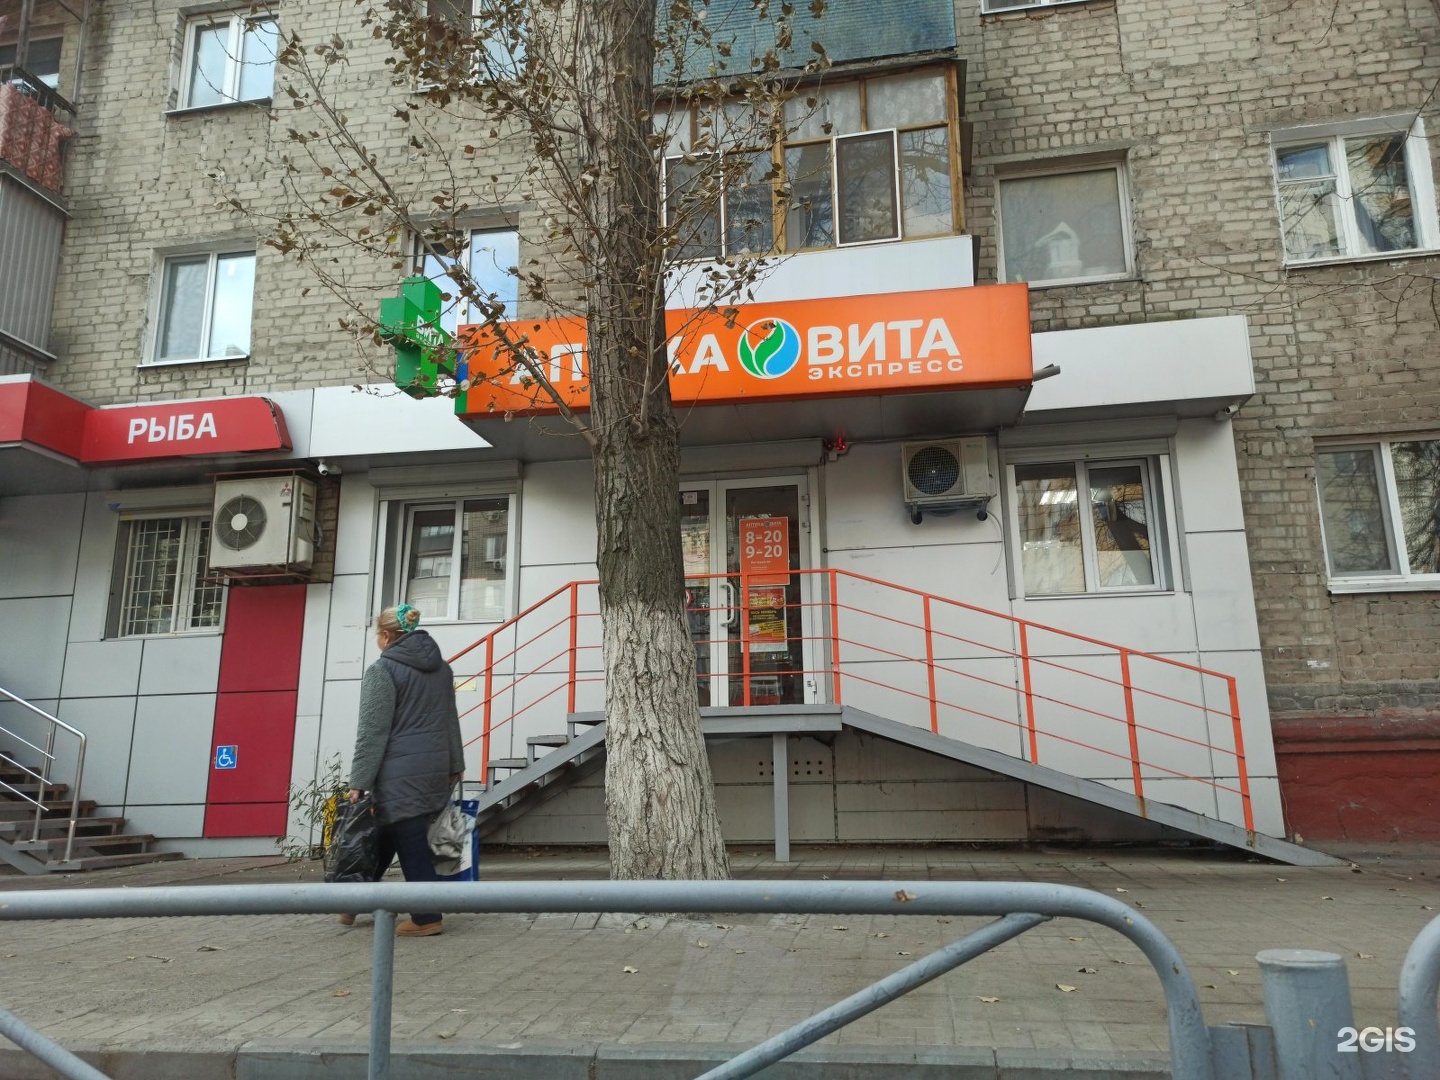 Аптека Вита Саранск Косарева 50